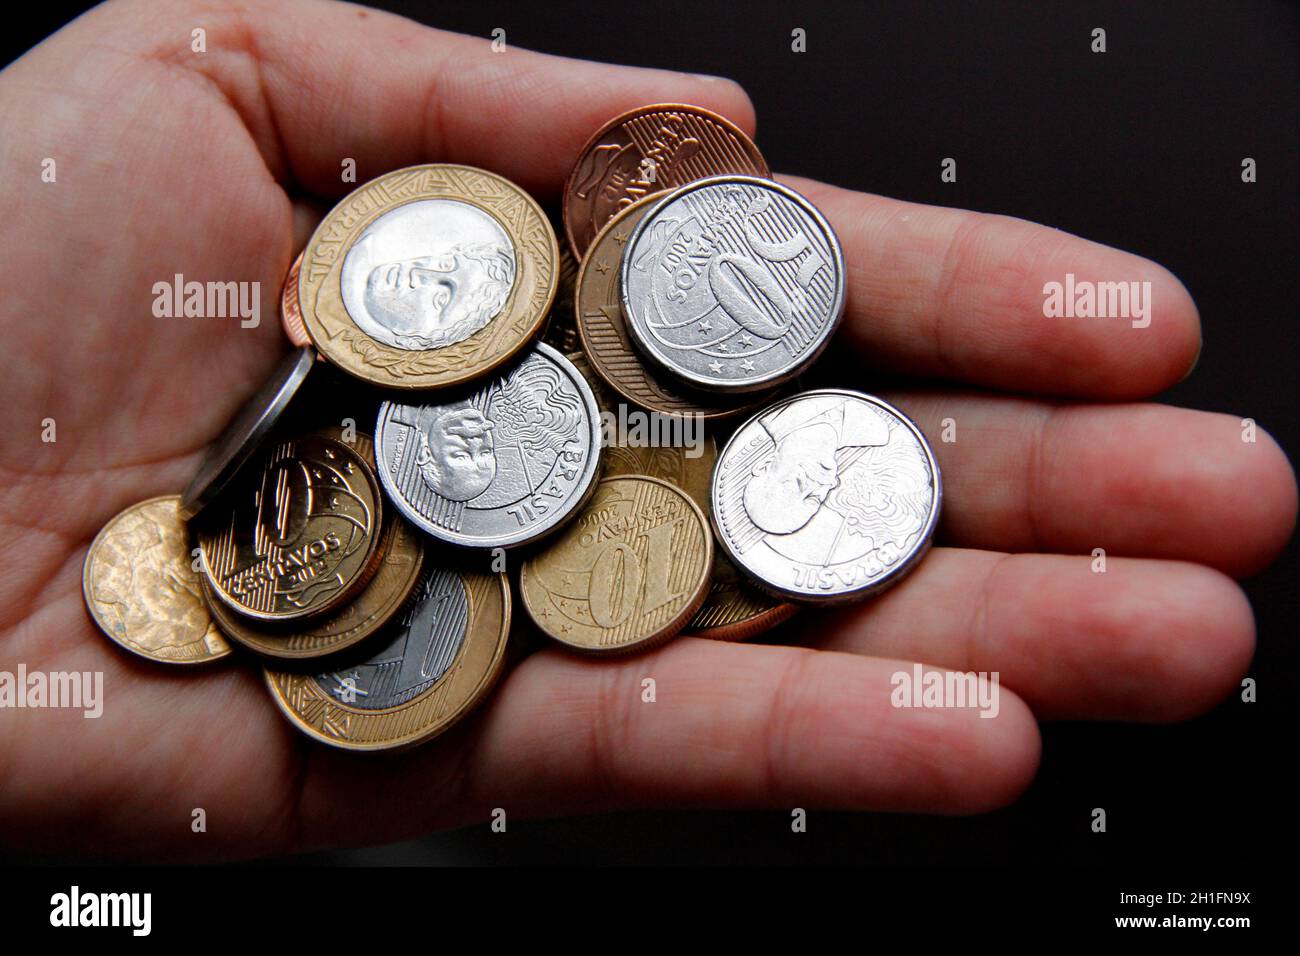 salvador, bahia / brasile - 23 gennaio 2015: La mano contiene monete reali, denaro brasiliano. *** Local Caption *** Foto Stock